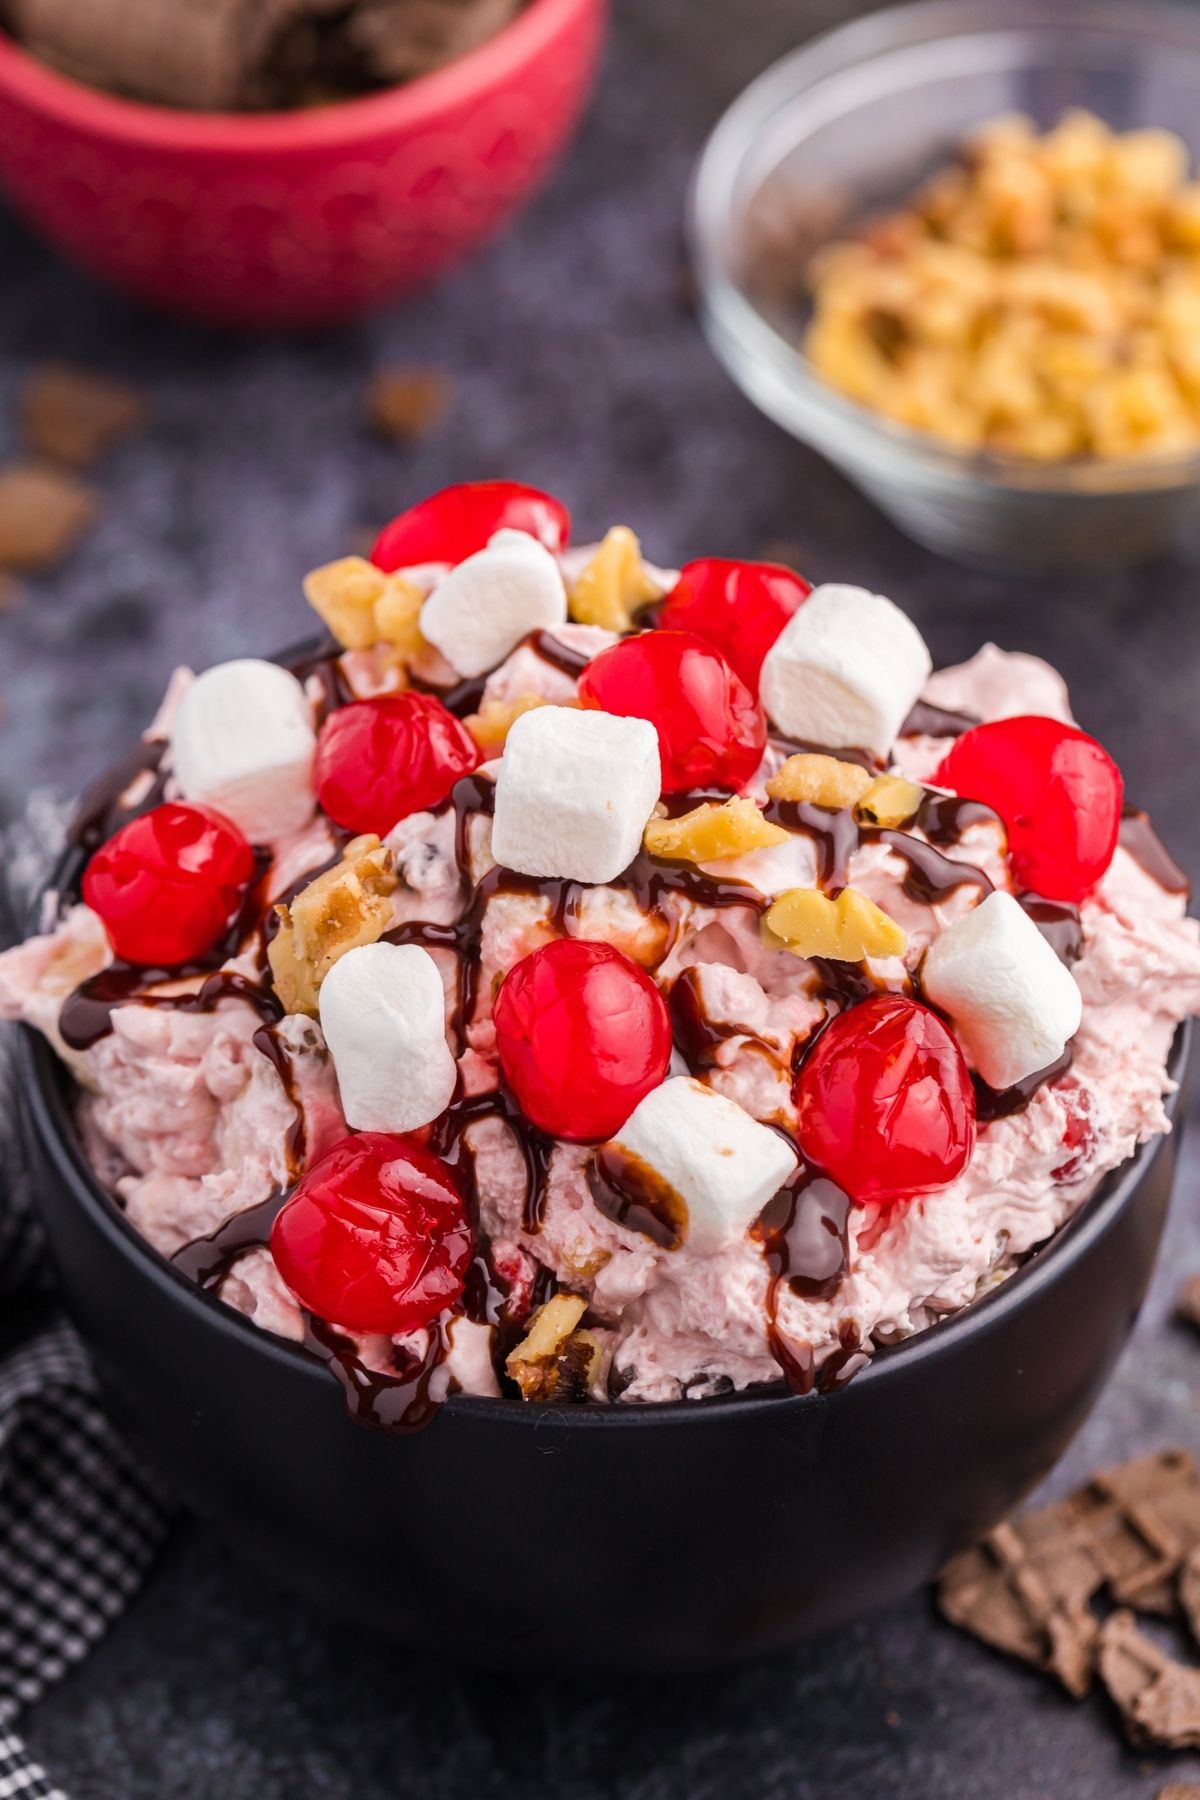 pink fluff in dark bowl with maraschino cherries, mini marshmalllows and chocolate sauce on top